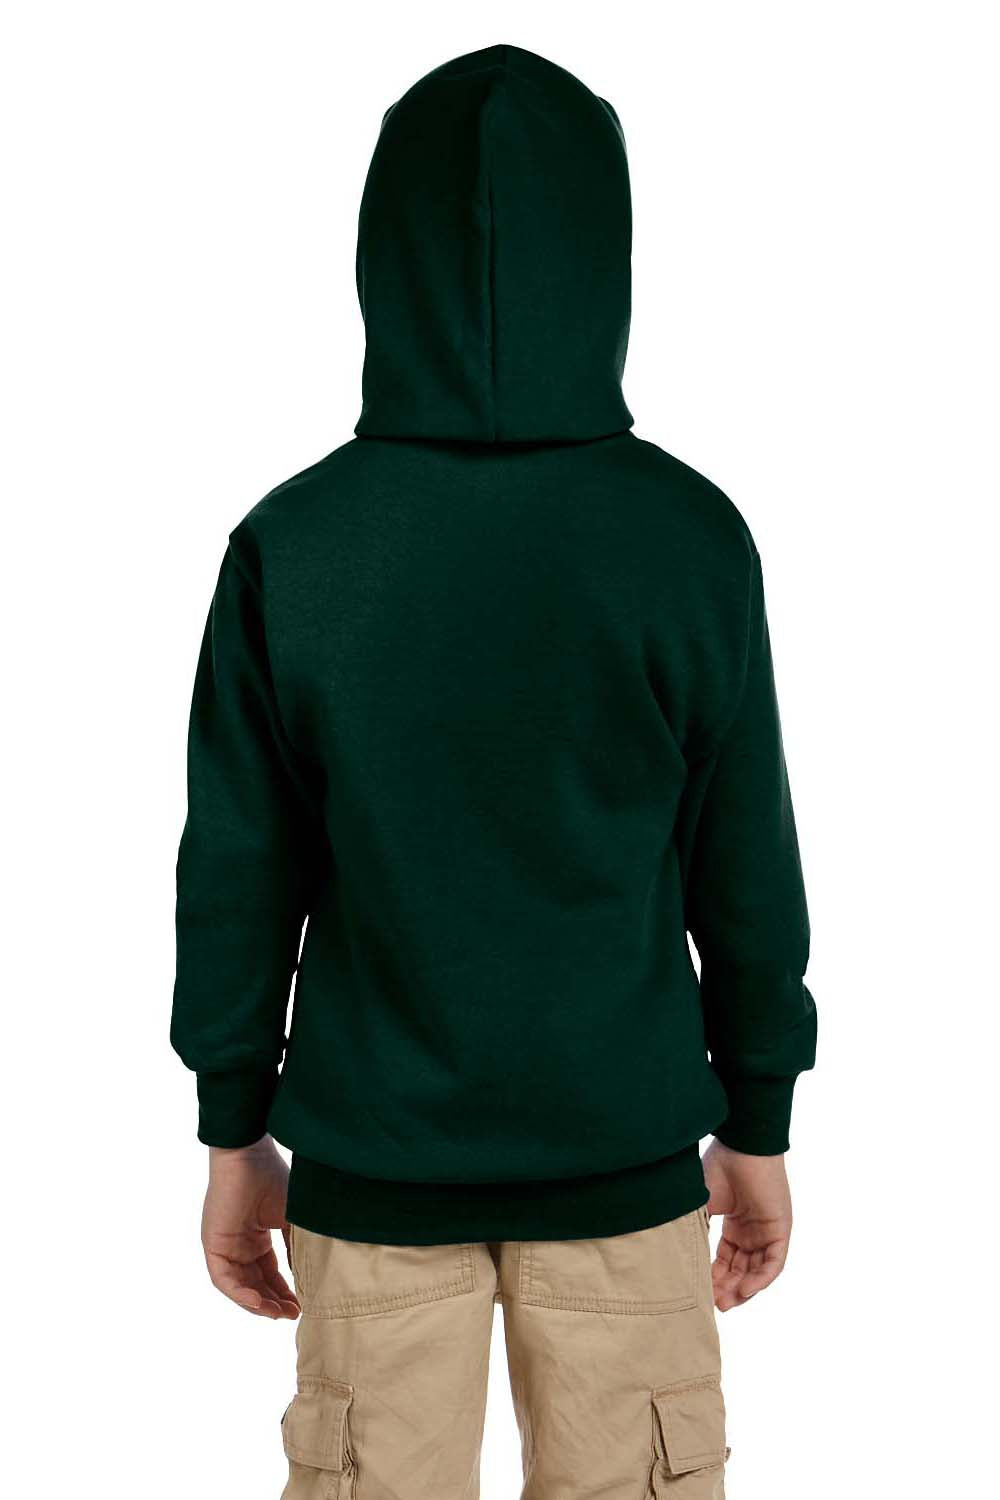 Hanes P473 Youth EcoSmart Print Pro XP Hooded Sweatshirt Hoodie Forest Green Back